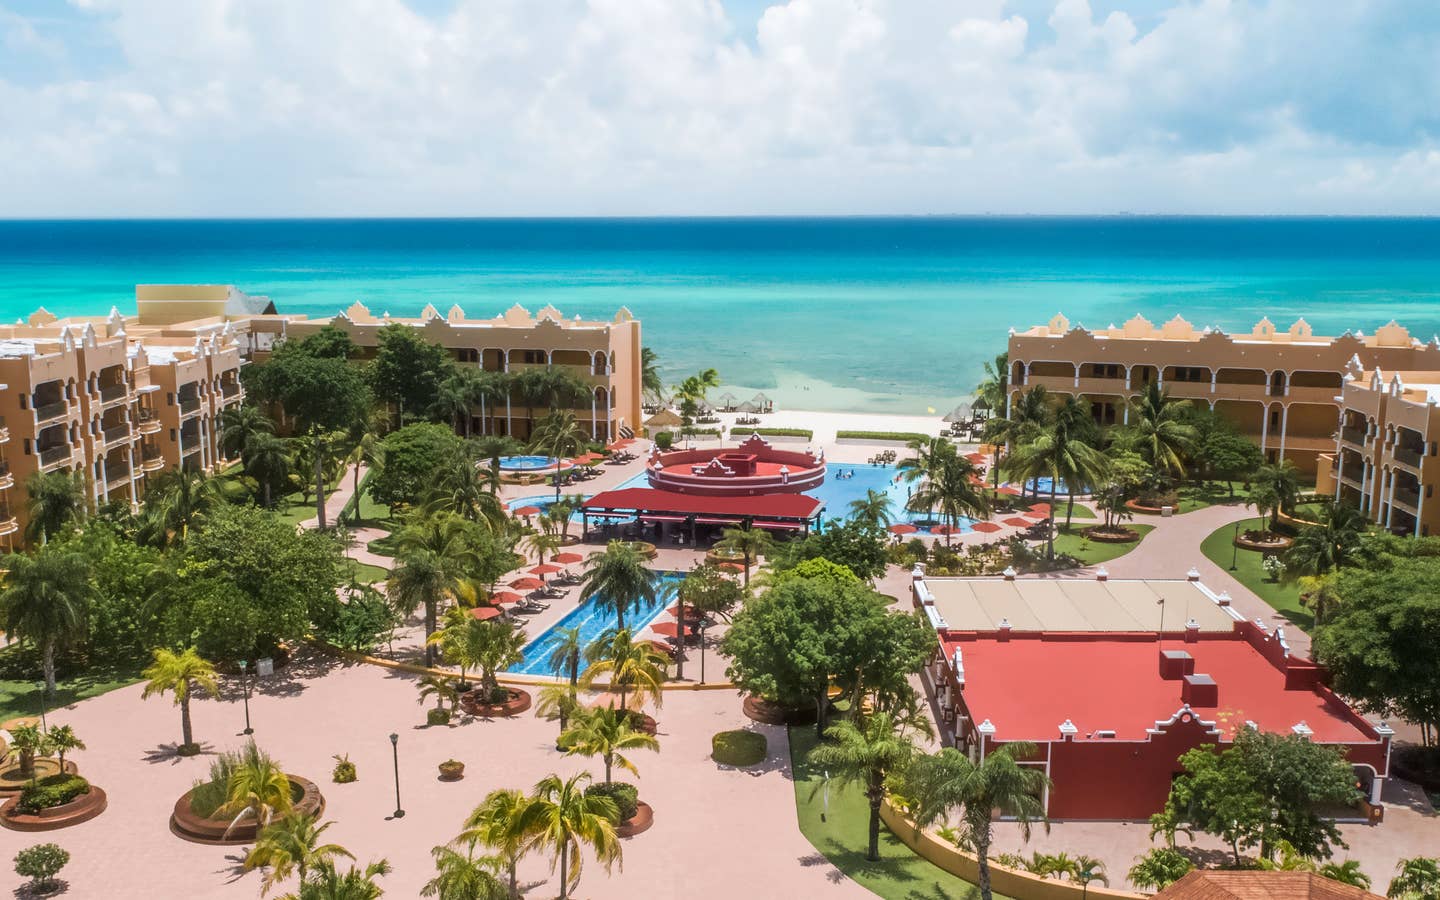 Aerial view of resort villas, outdoor pools and the ocean at The Royal Haciendas in Playa del Carmen, Mexico.